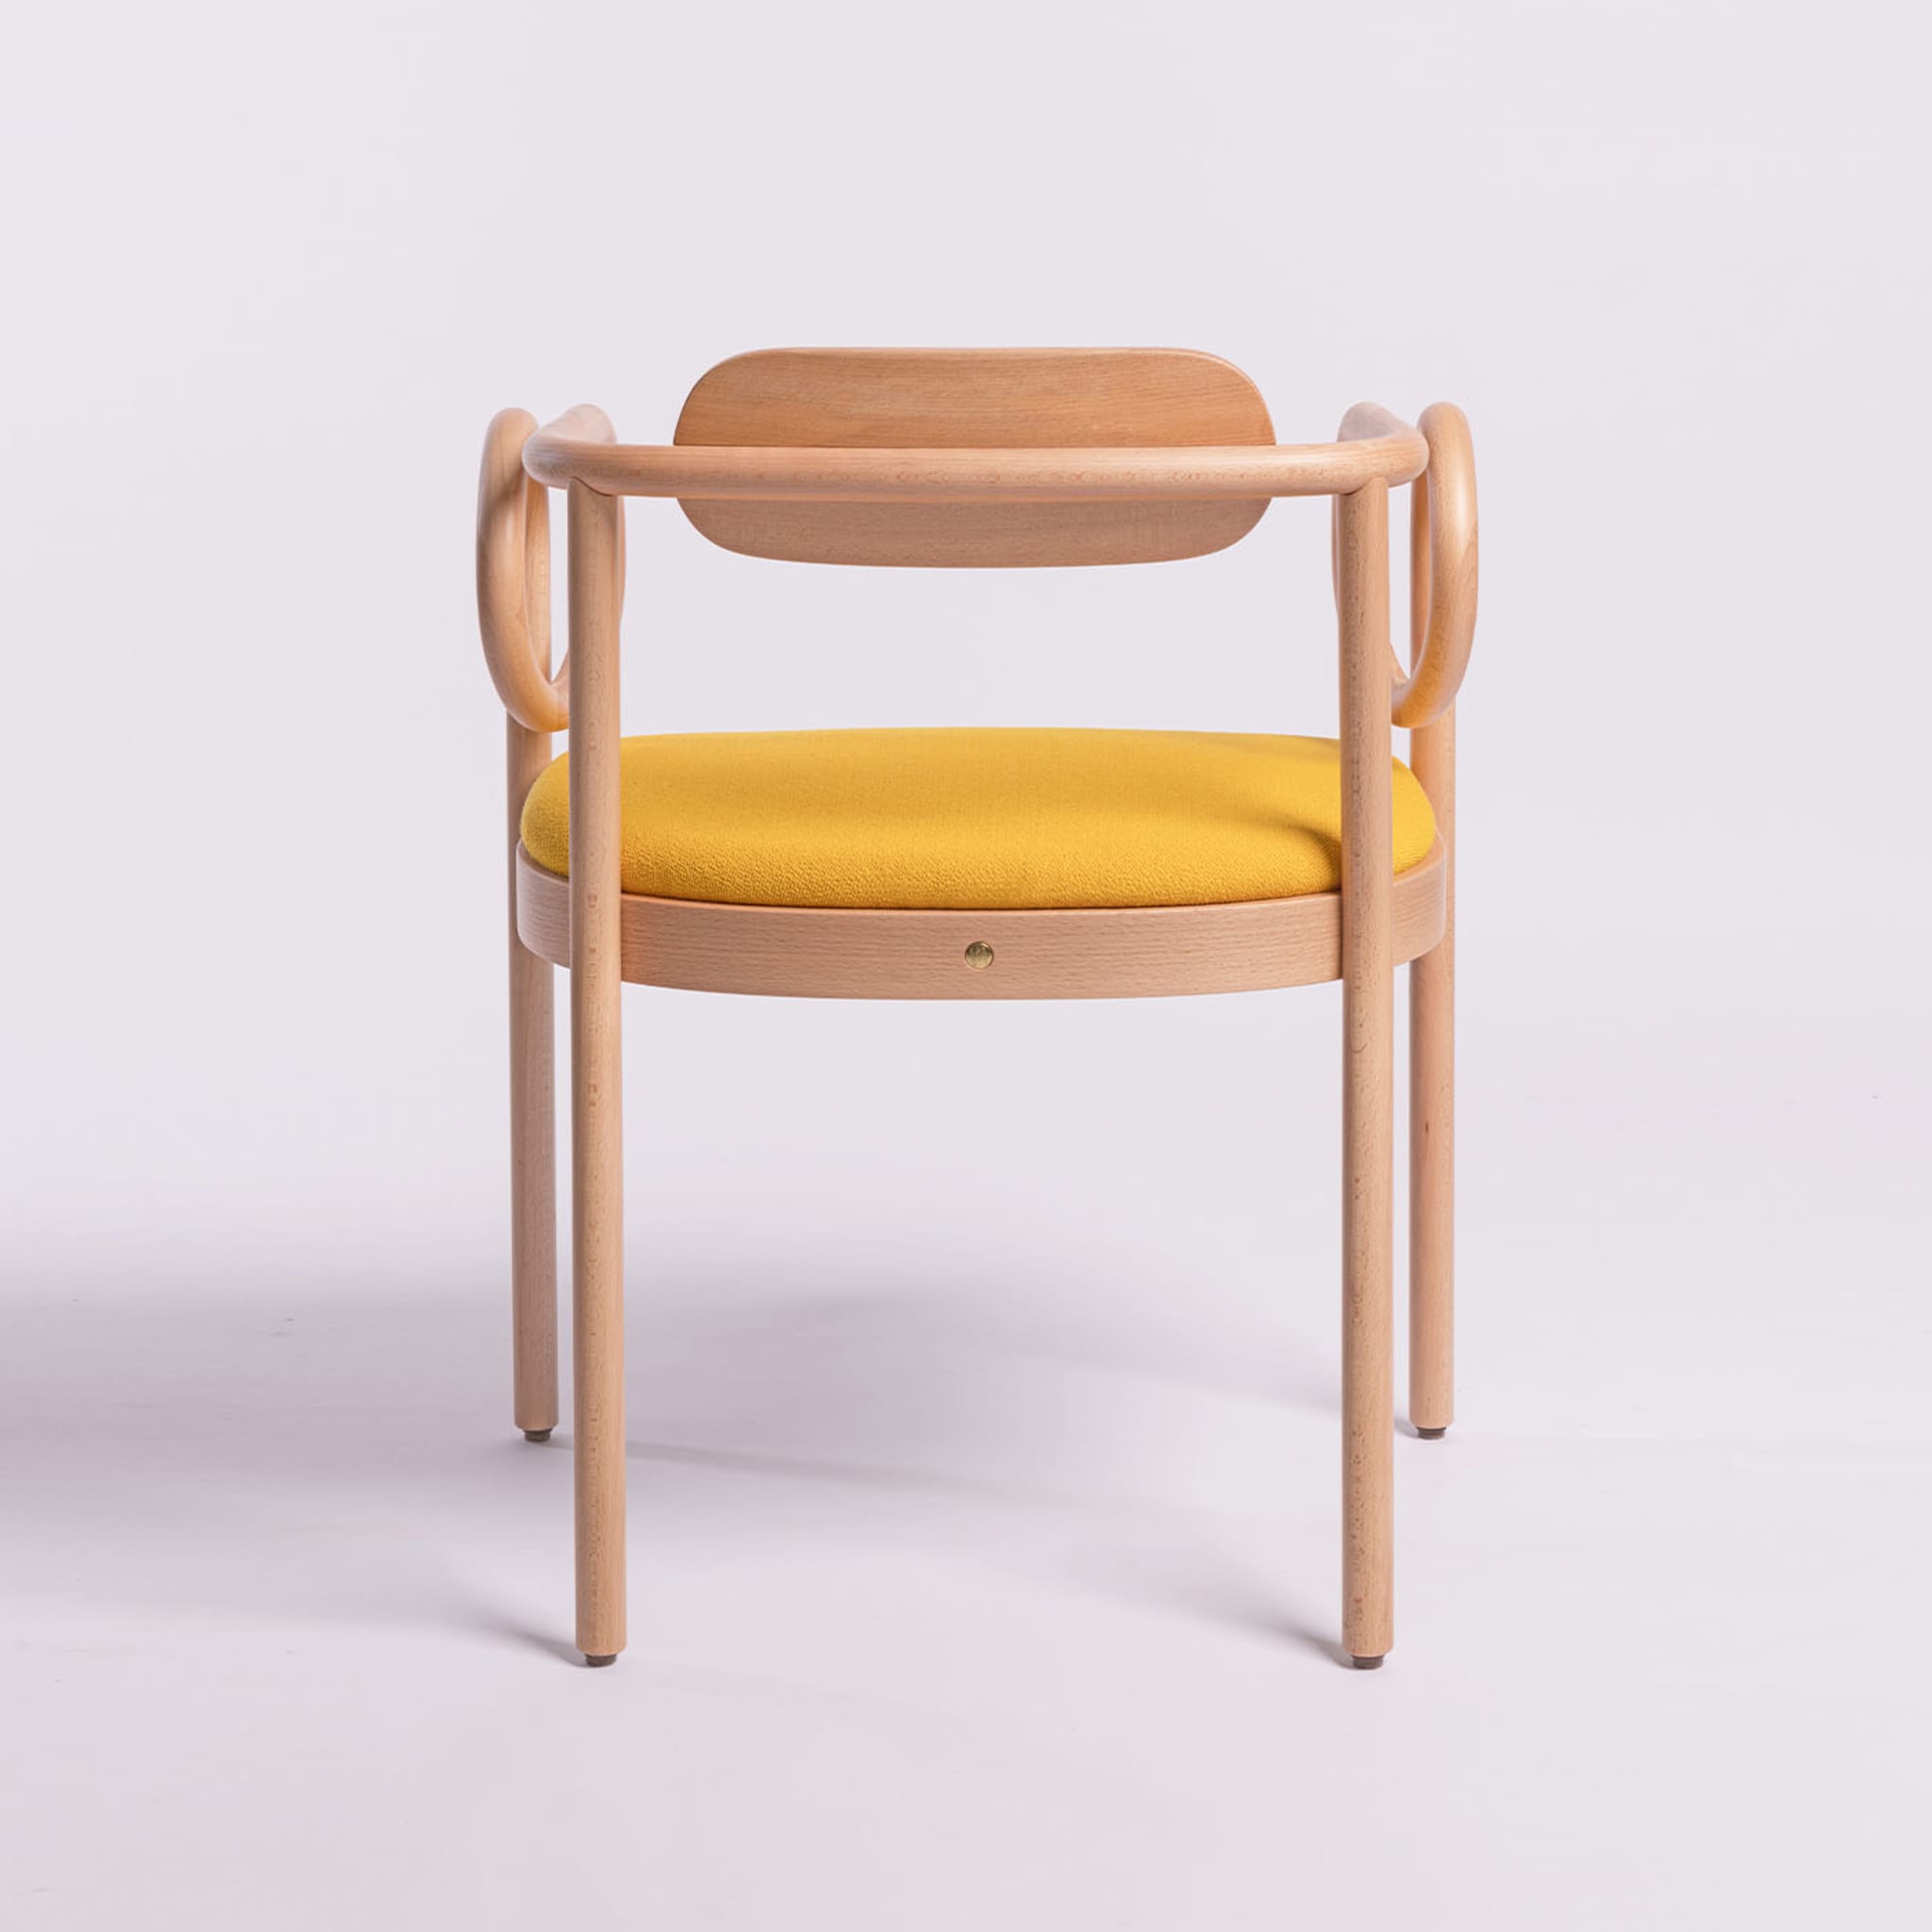 Loop Dining Chair by India Mahdavi - Alternative view 1